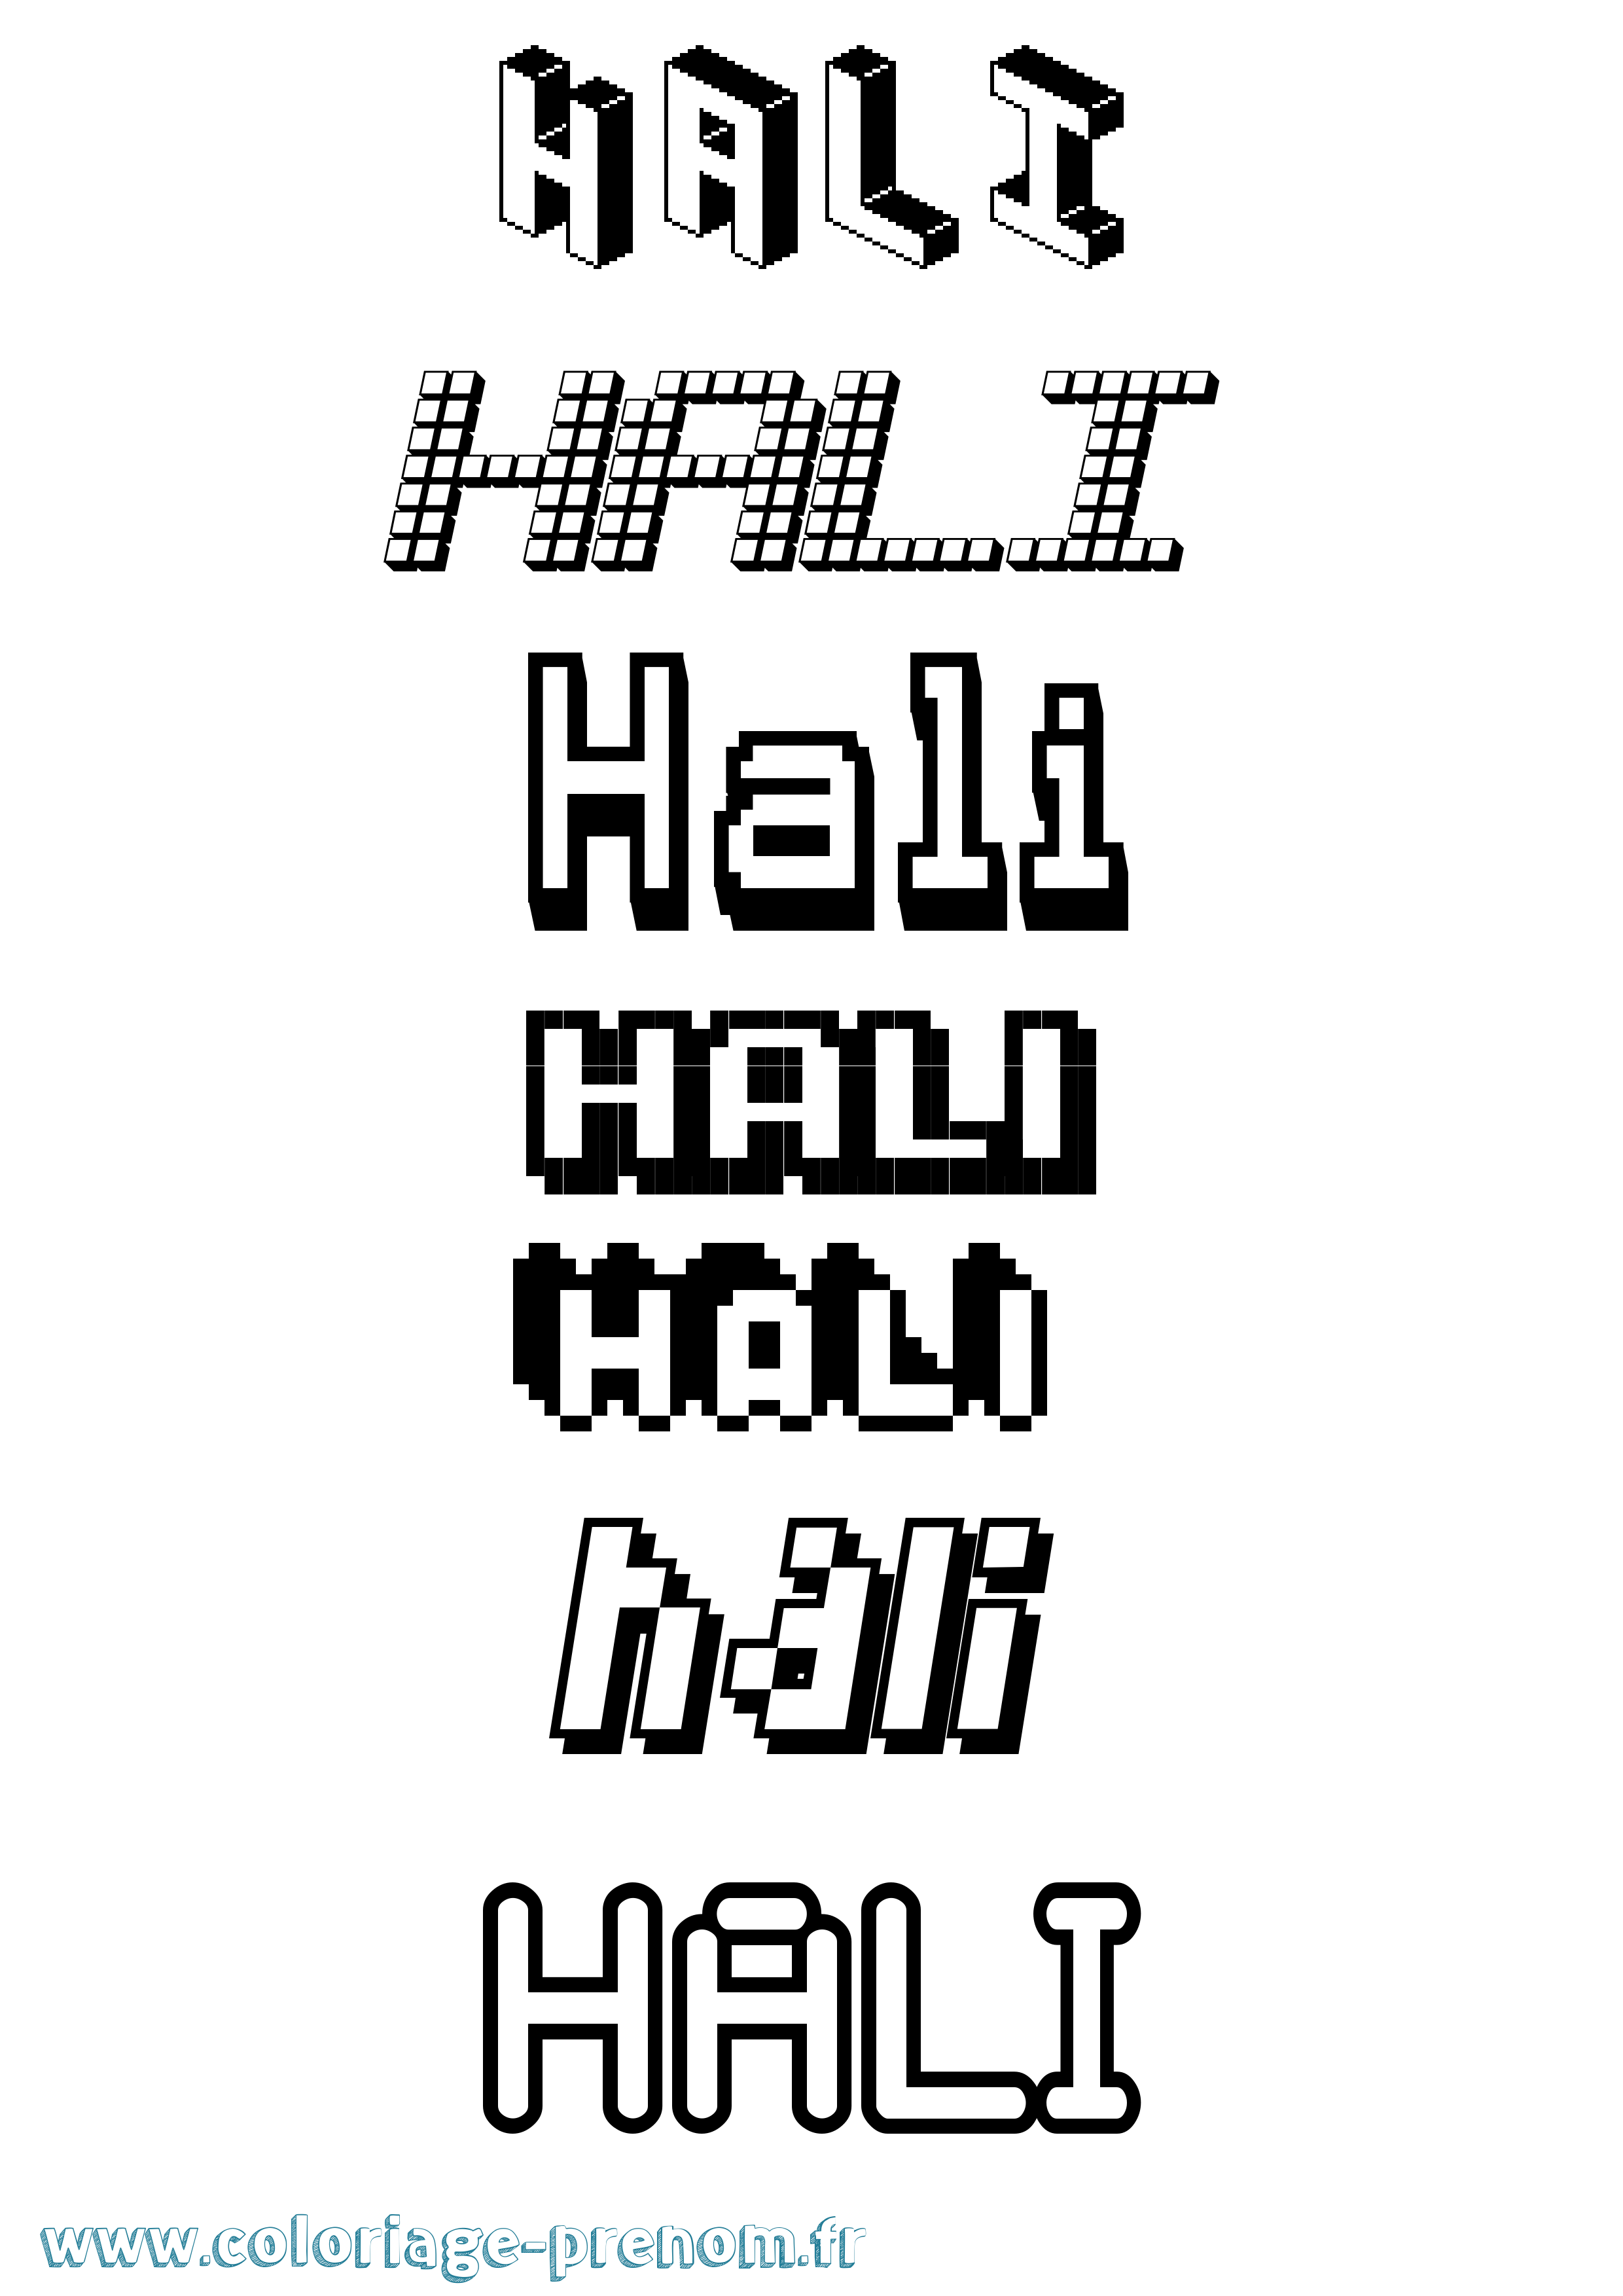 Coloriage prénom Hali Pixel